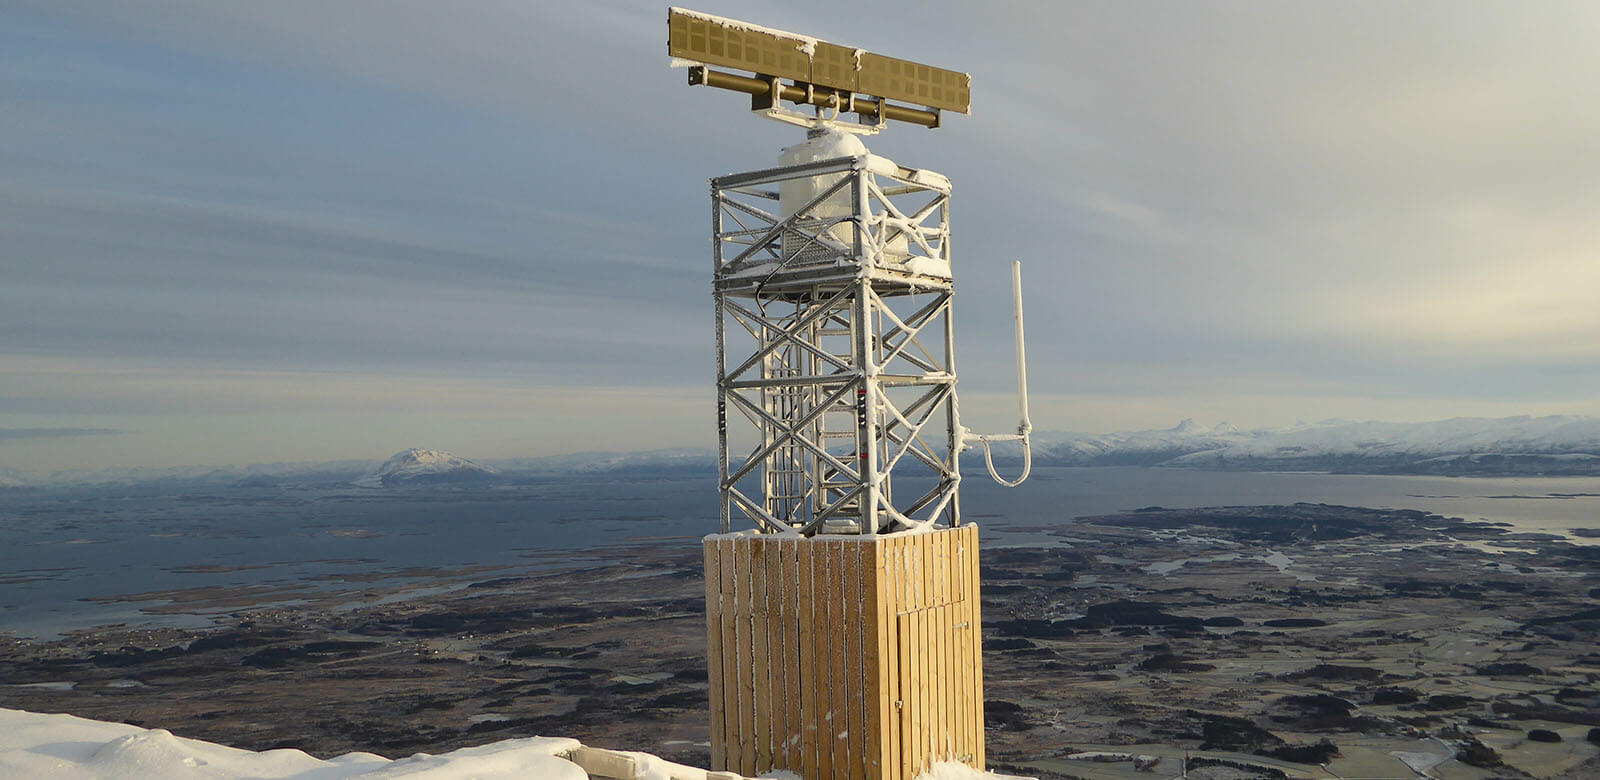 MSSR Condor MK3 Surveillance Radar